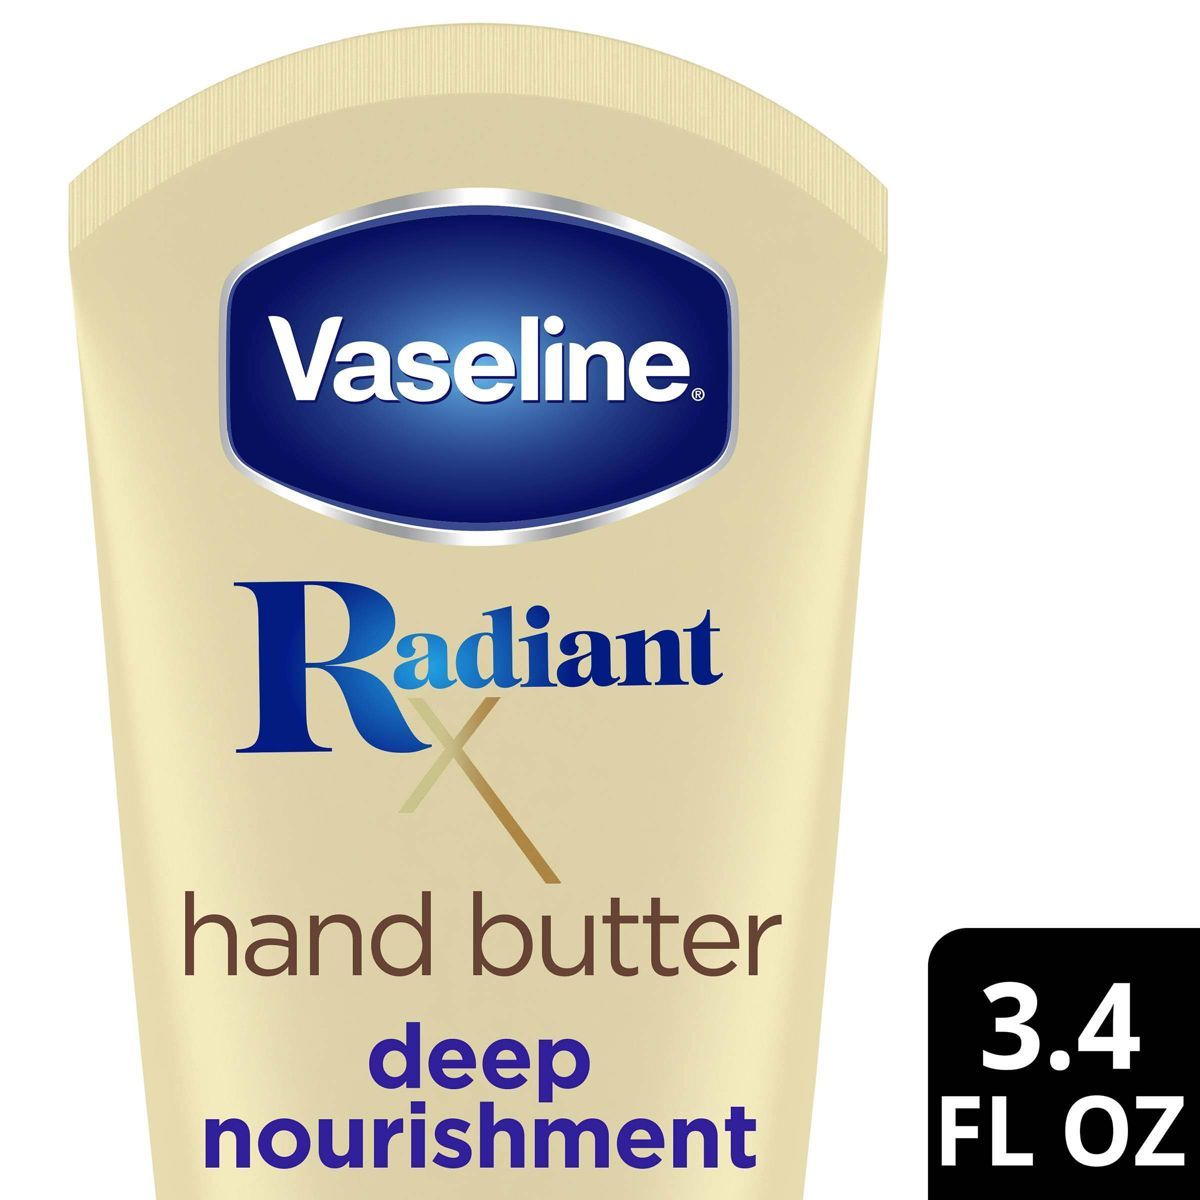 Vaseline Radiant x Deep Nourishment Hand Butter - 3.4oz | Target